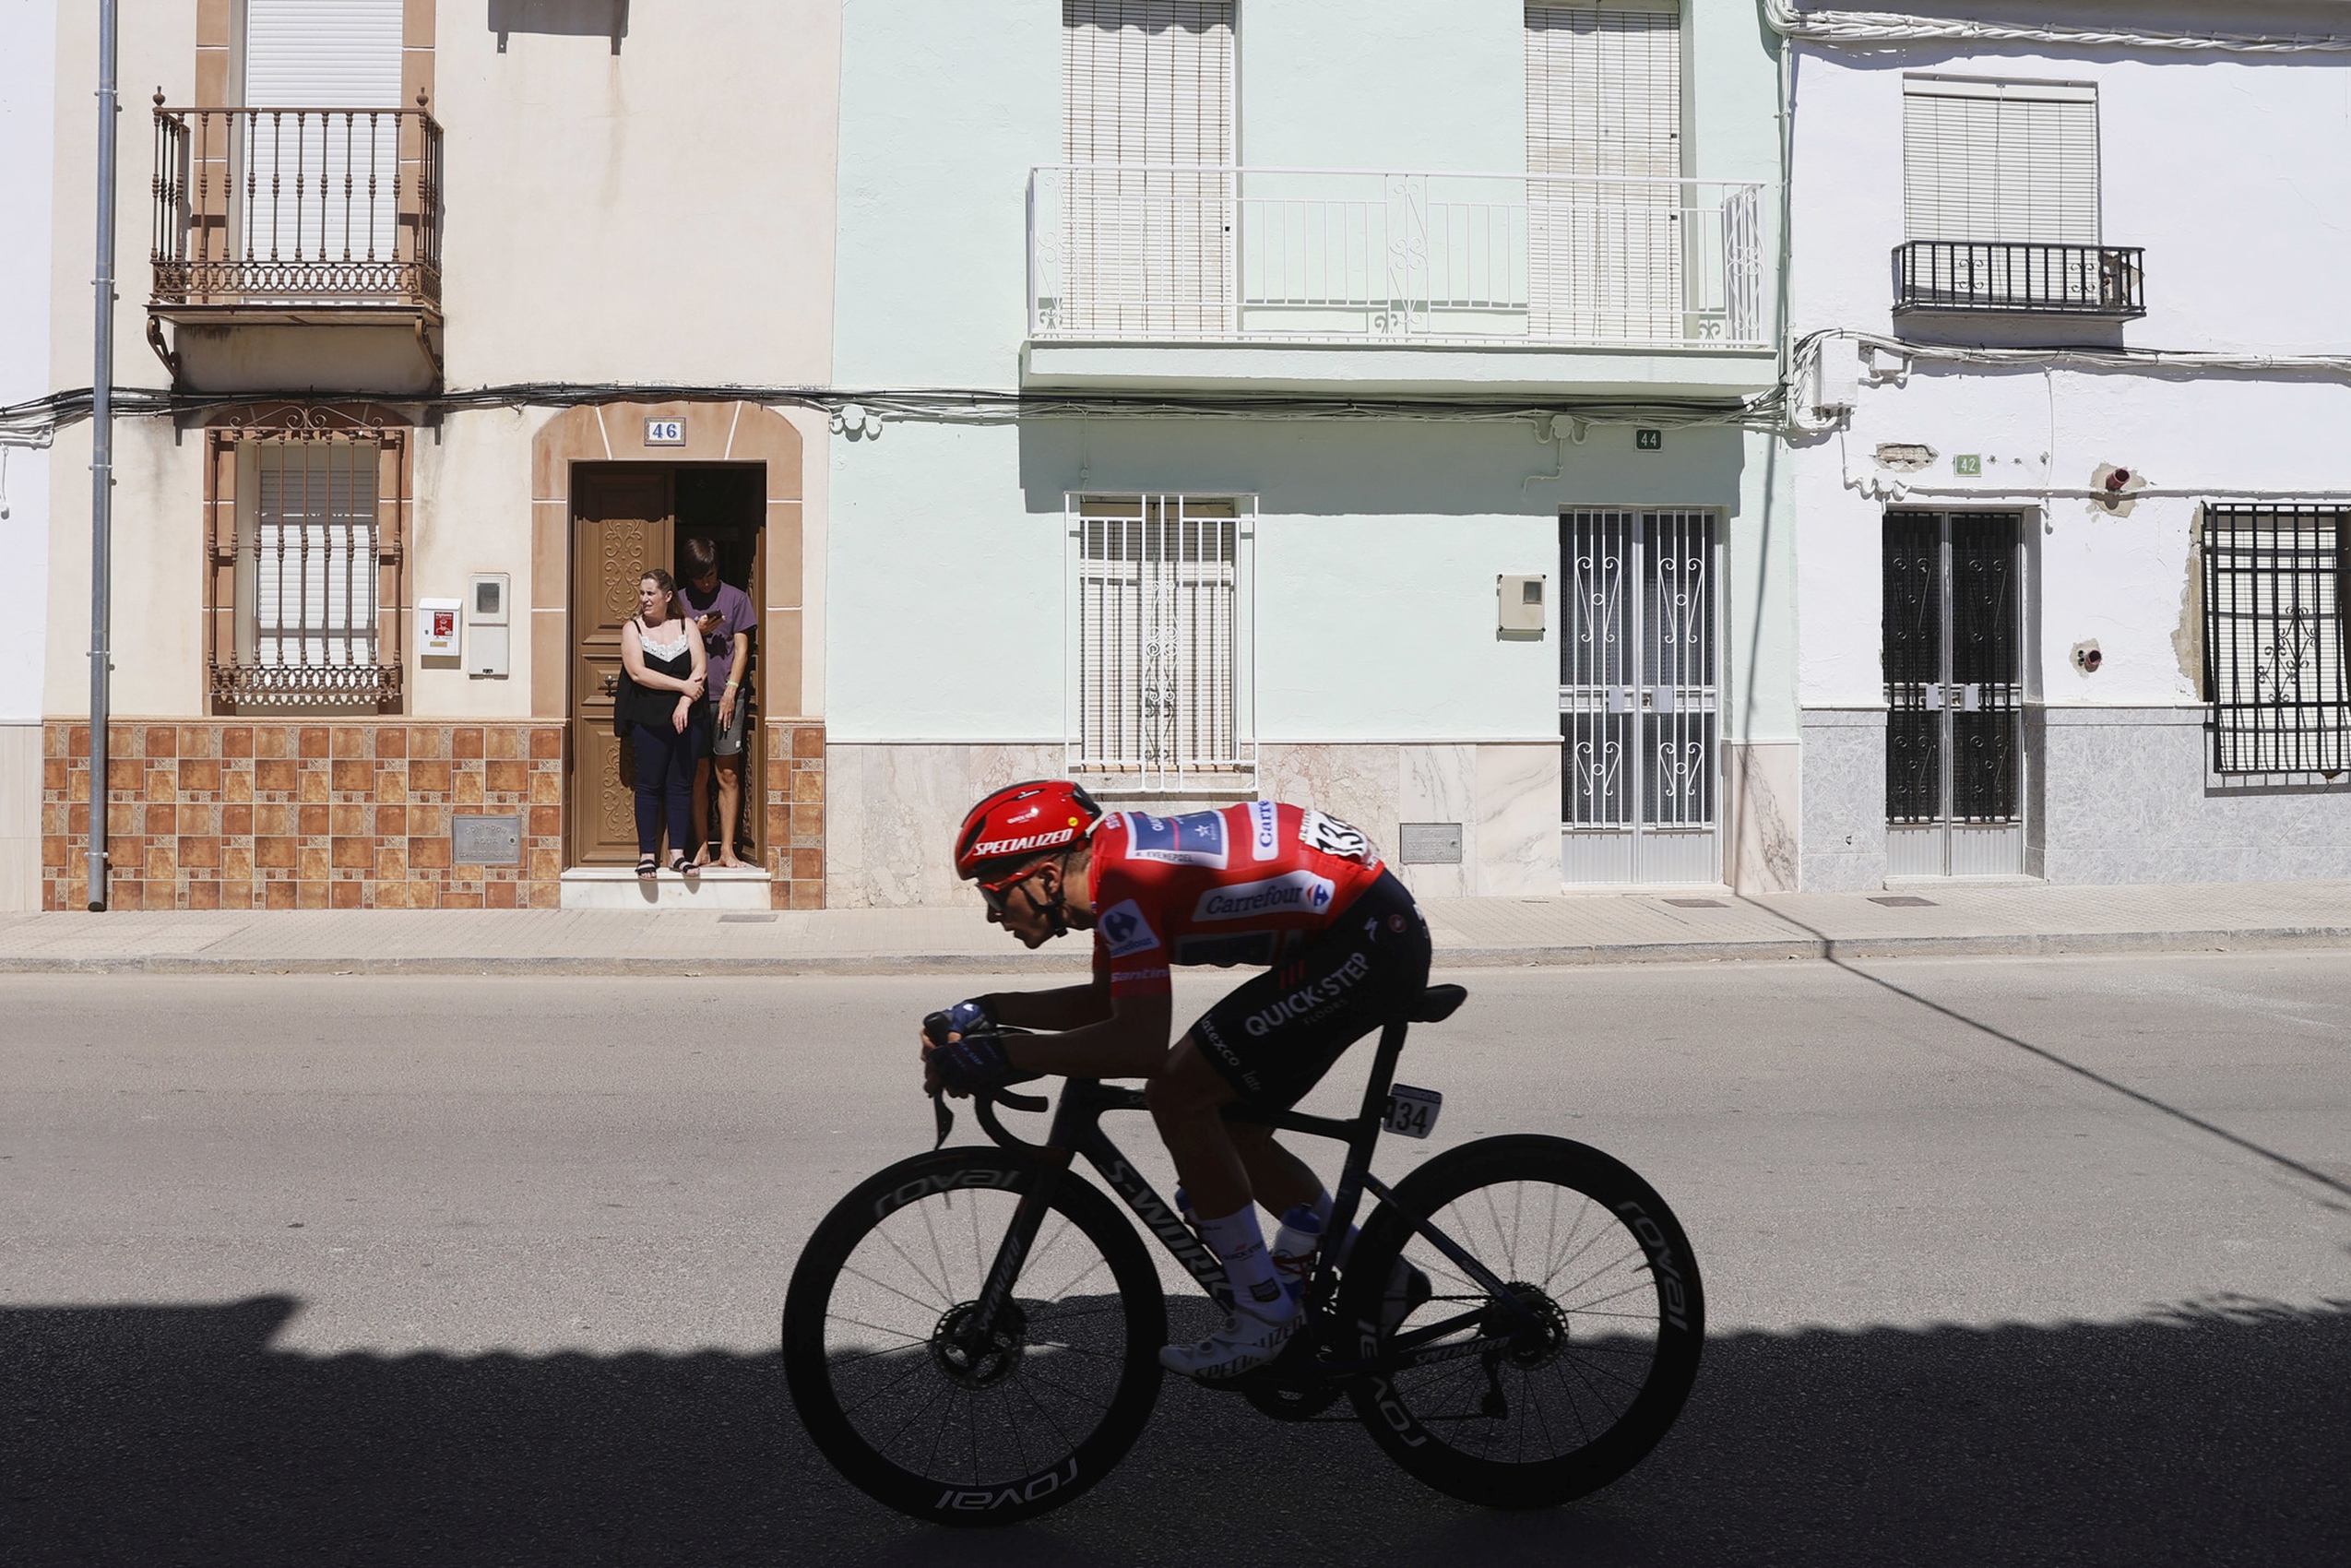 Remco Evenepoel w koszulce lidera Vuelta a Espana